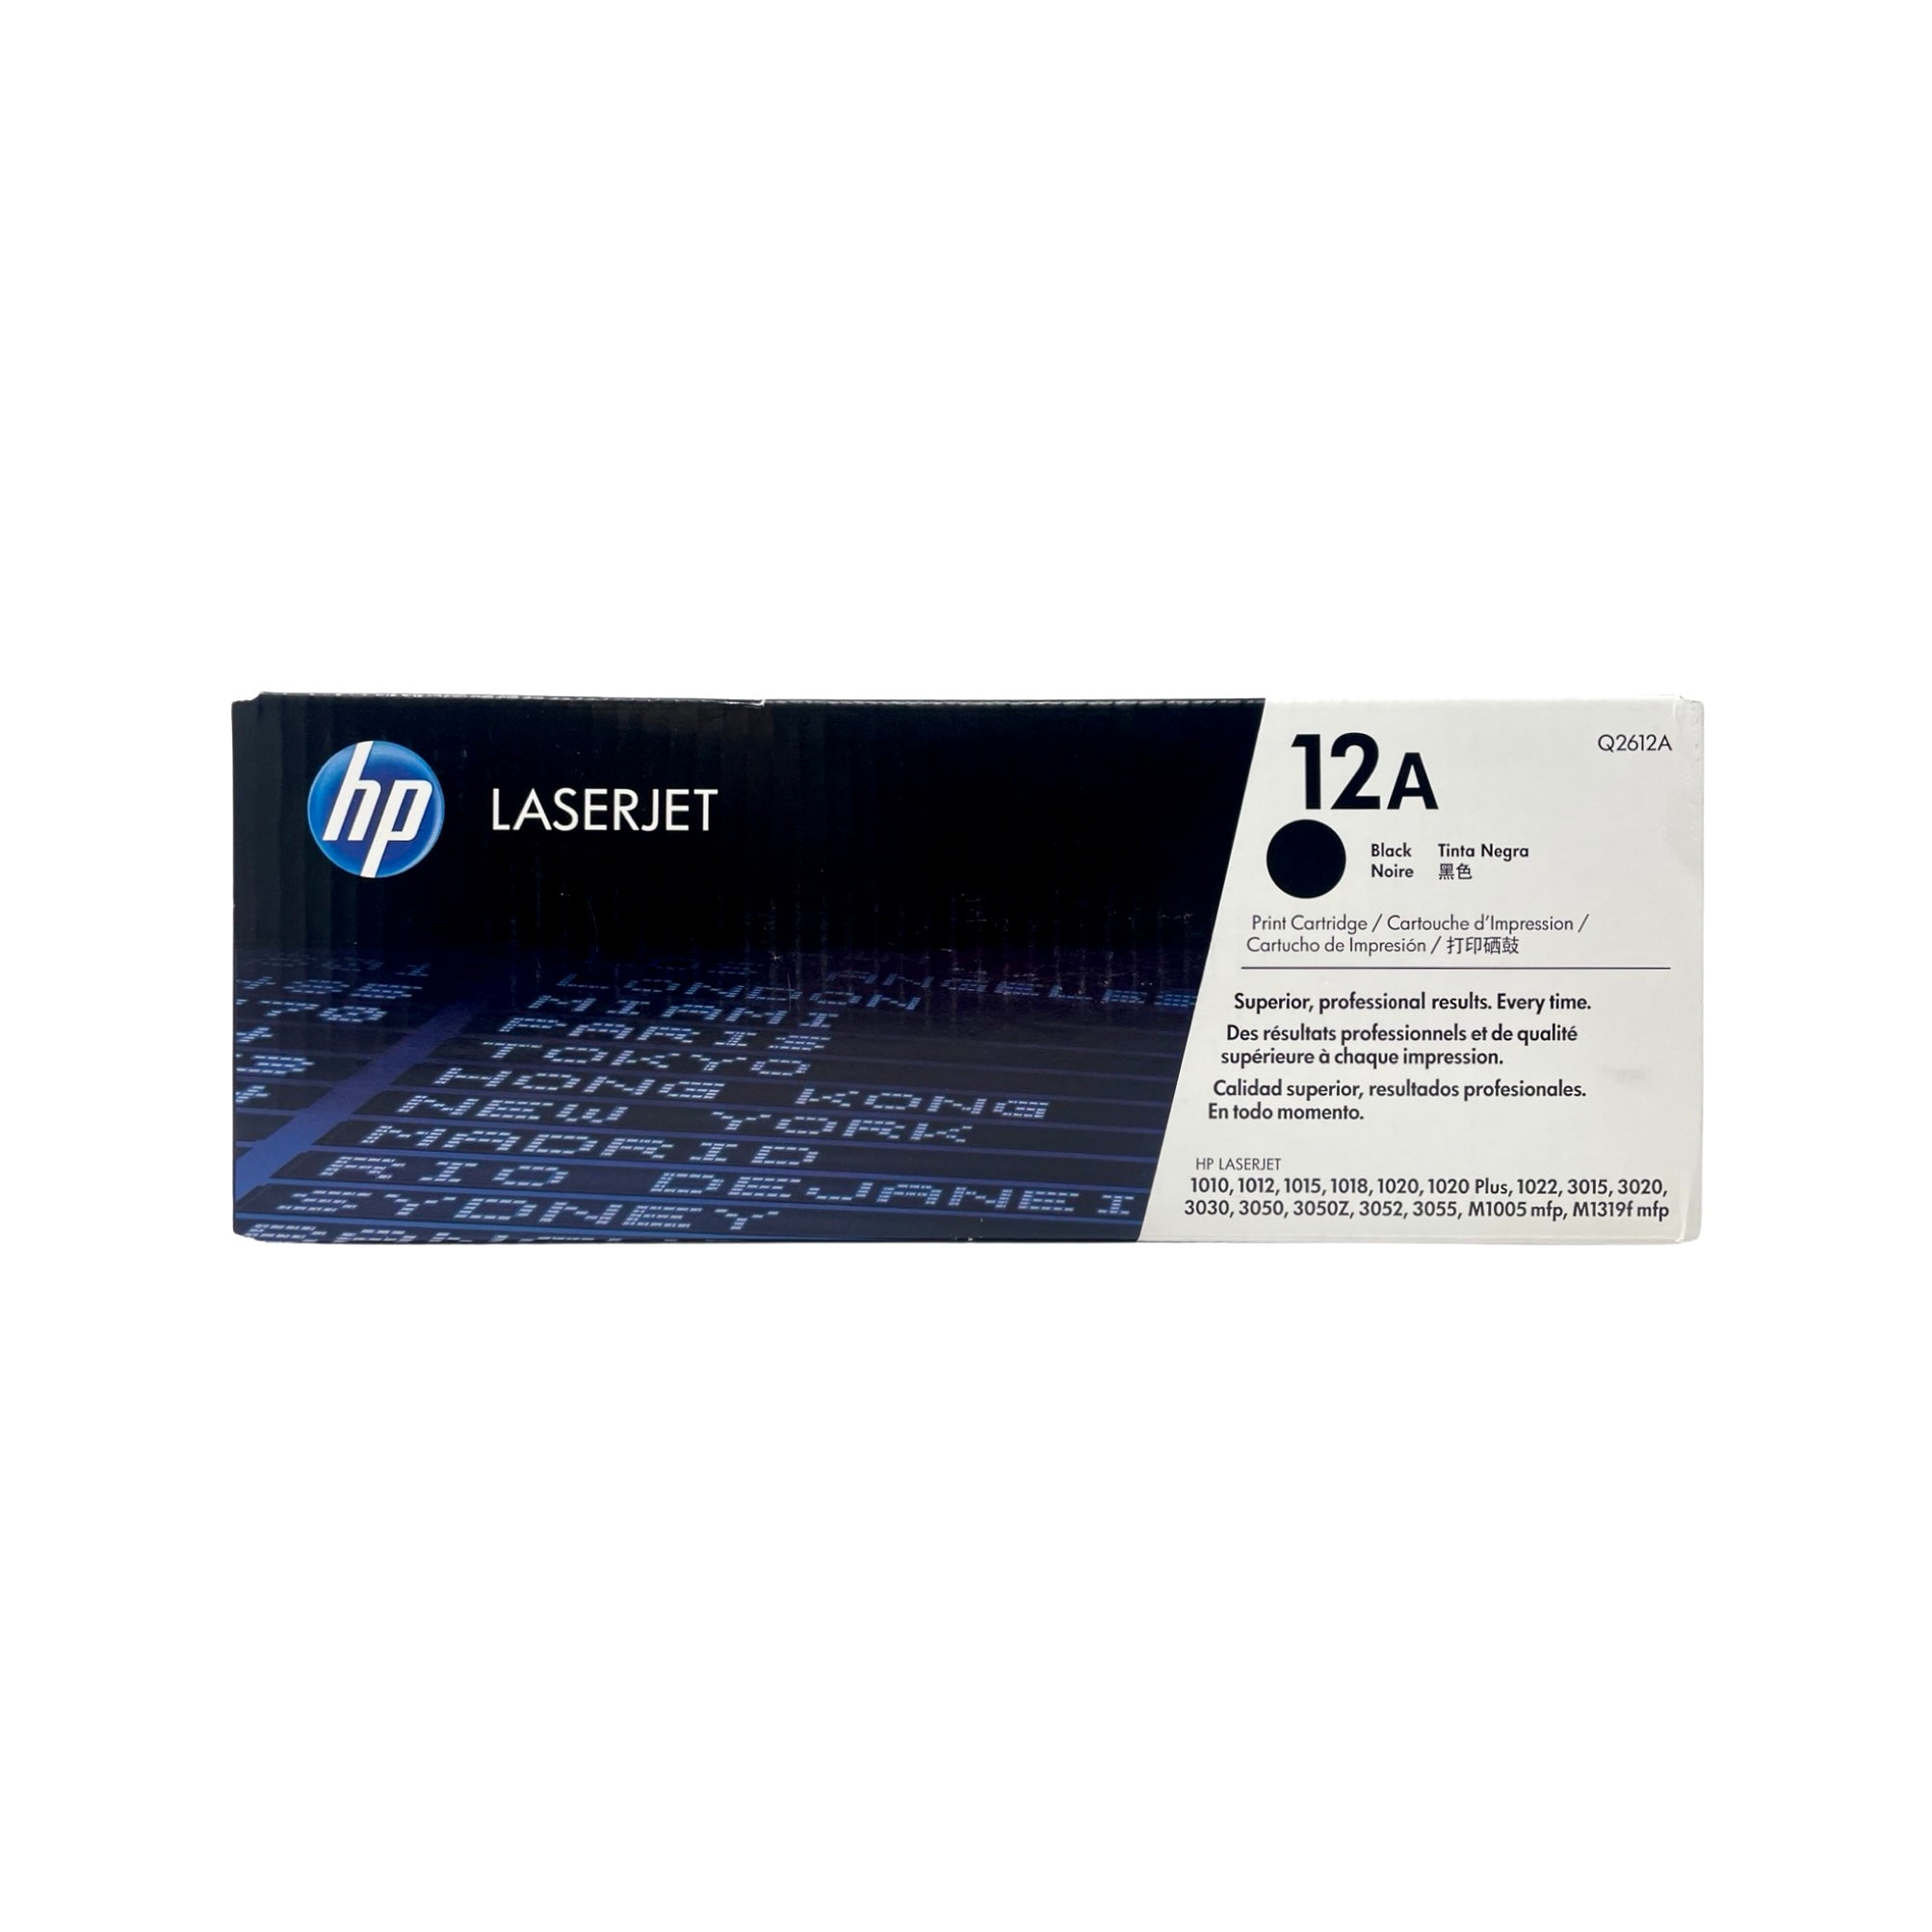 Discount HP LaserJet Toner Cartridges | Genuine HP Printer Toner Cartridges